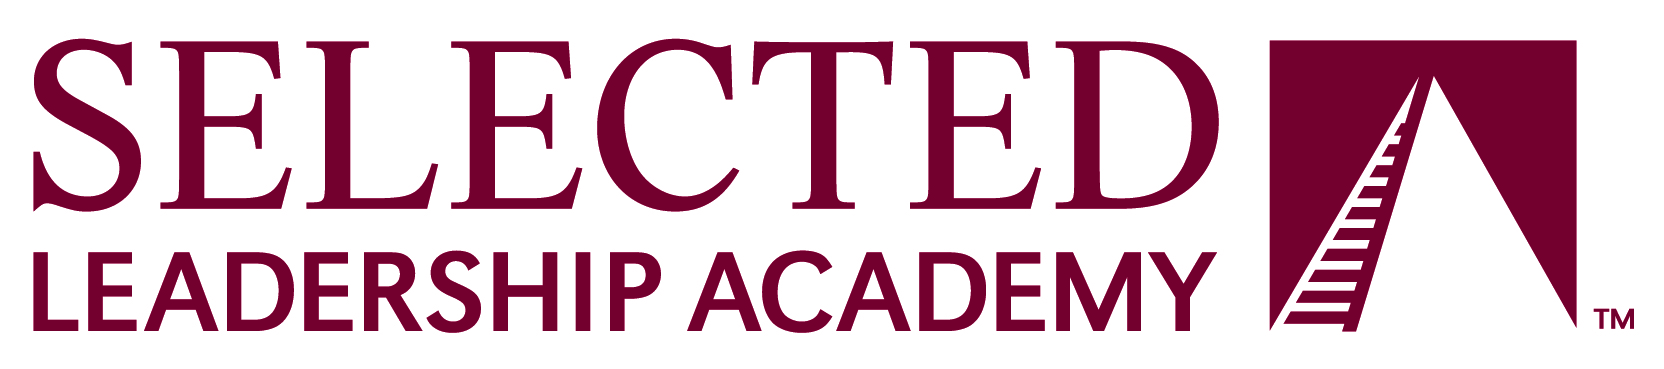 Selected Leadership Academy